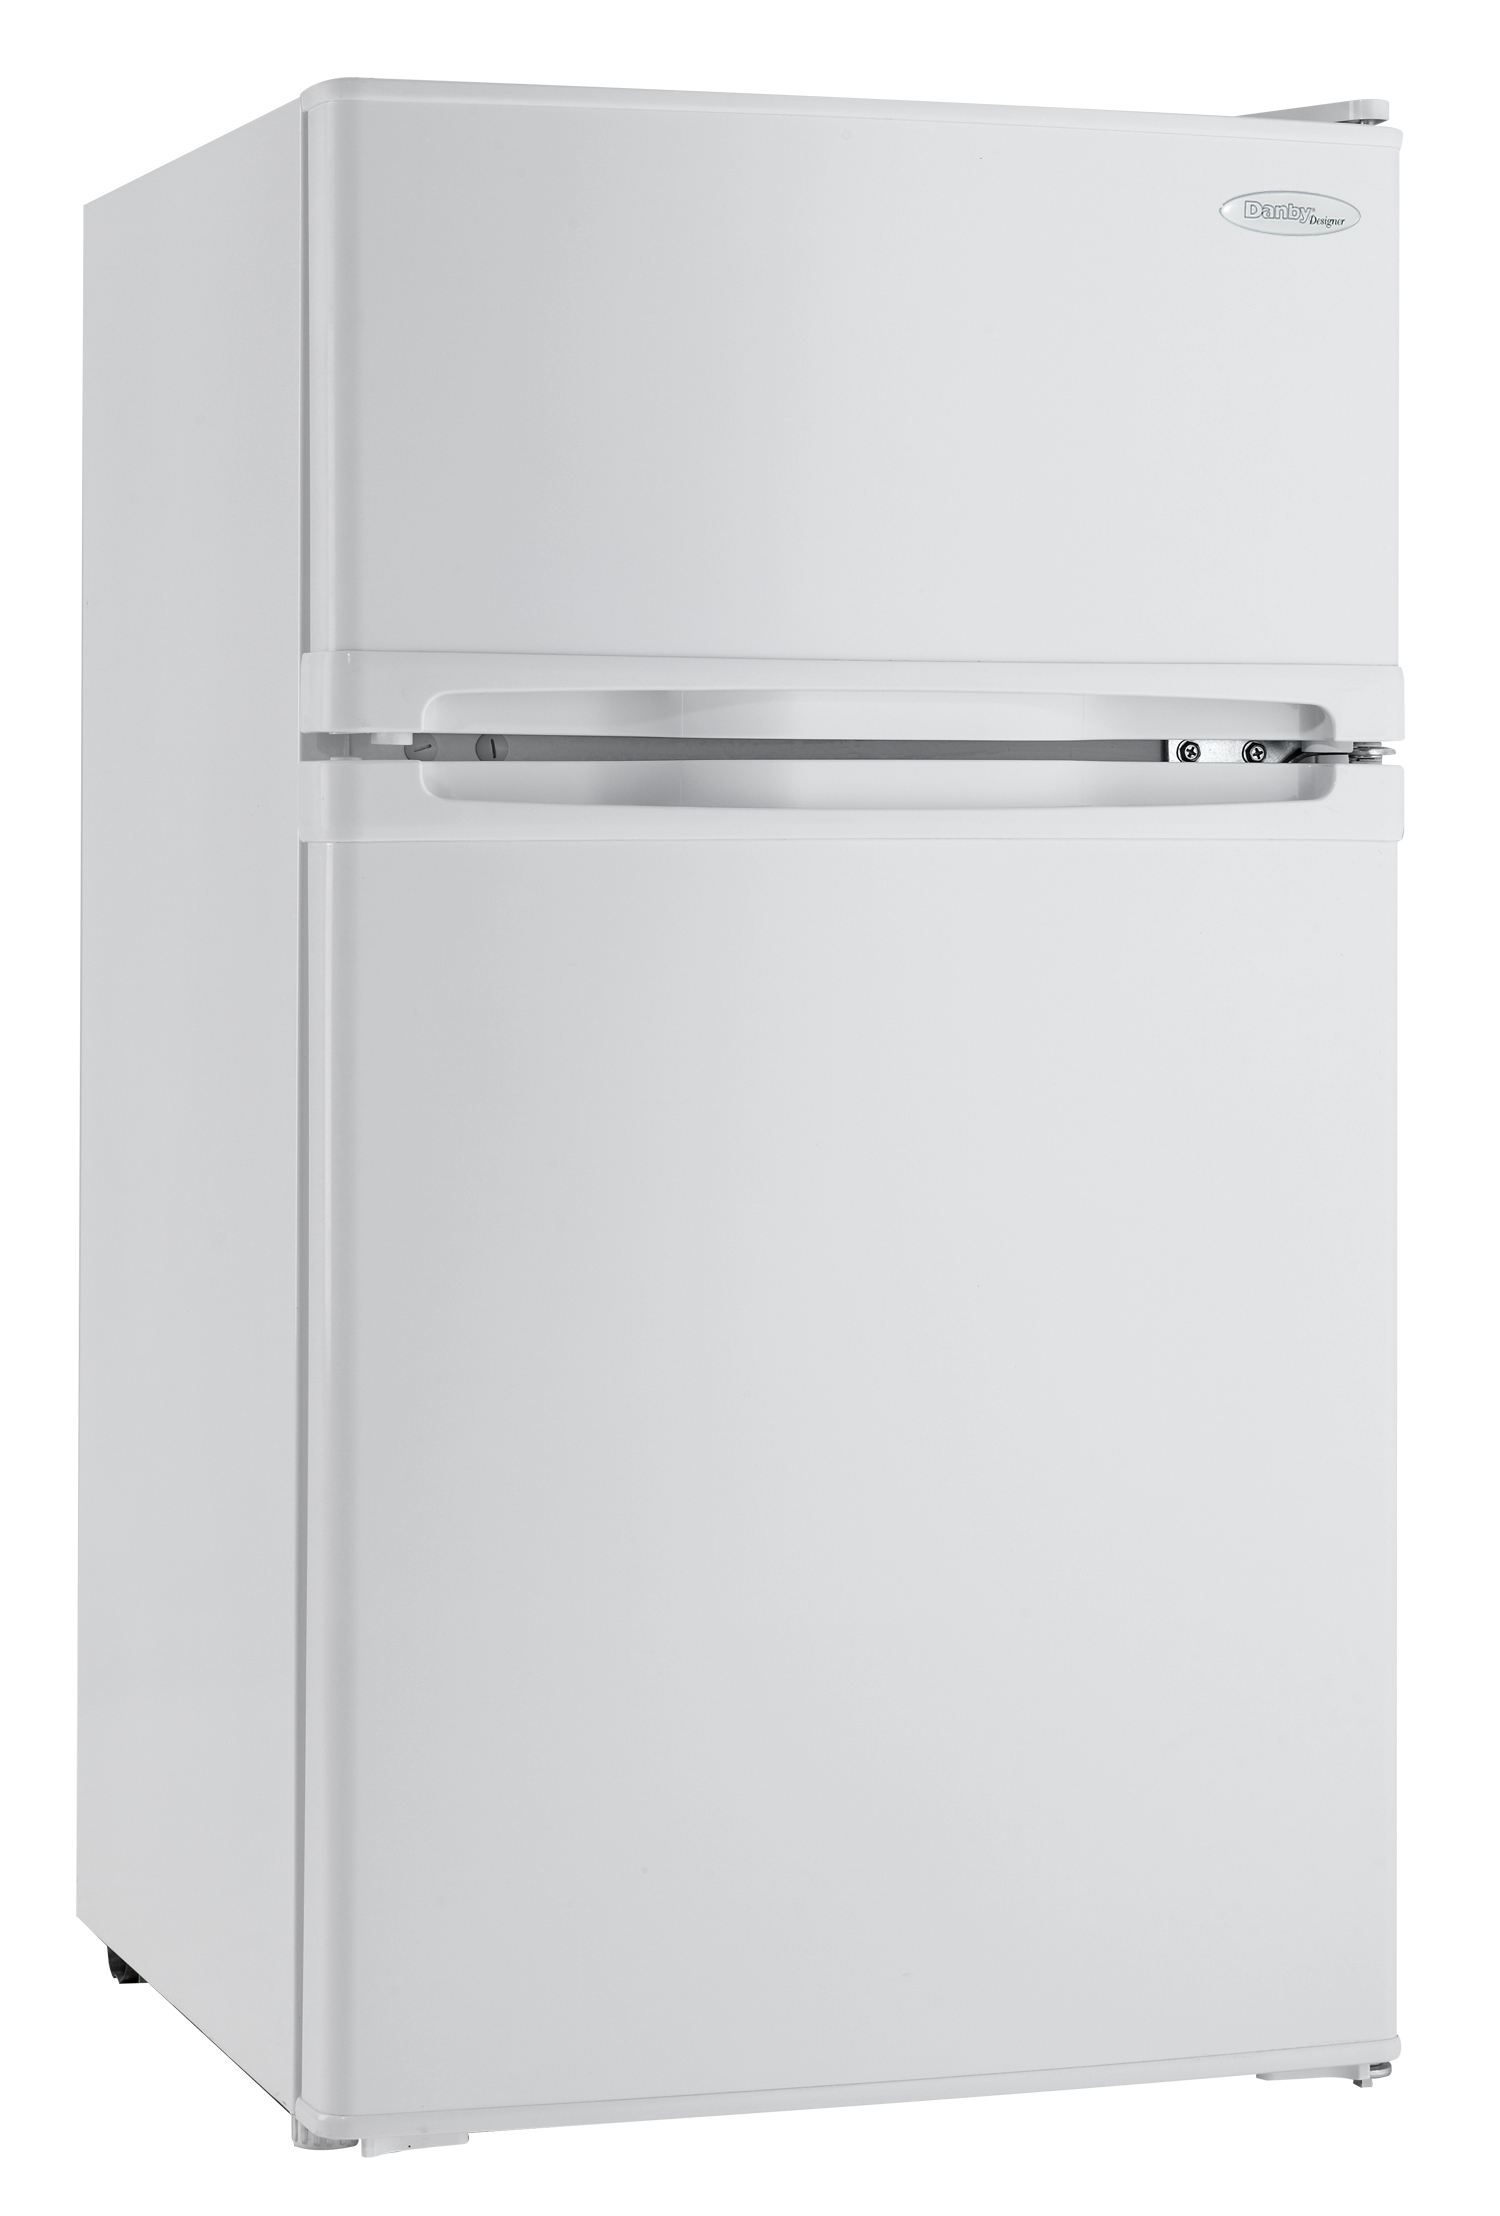 Danby Designer 3.1 cu. ft. Compact Refrigerator